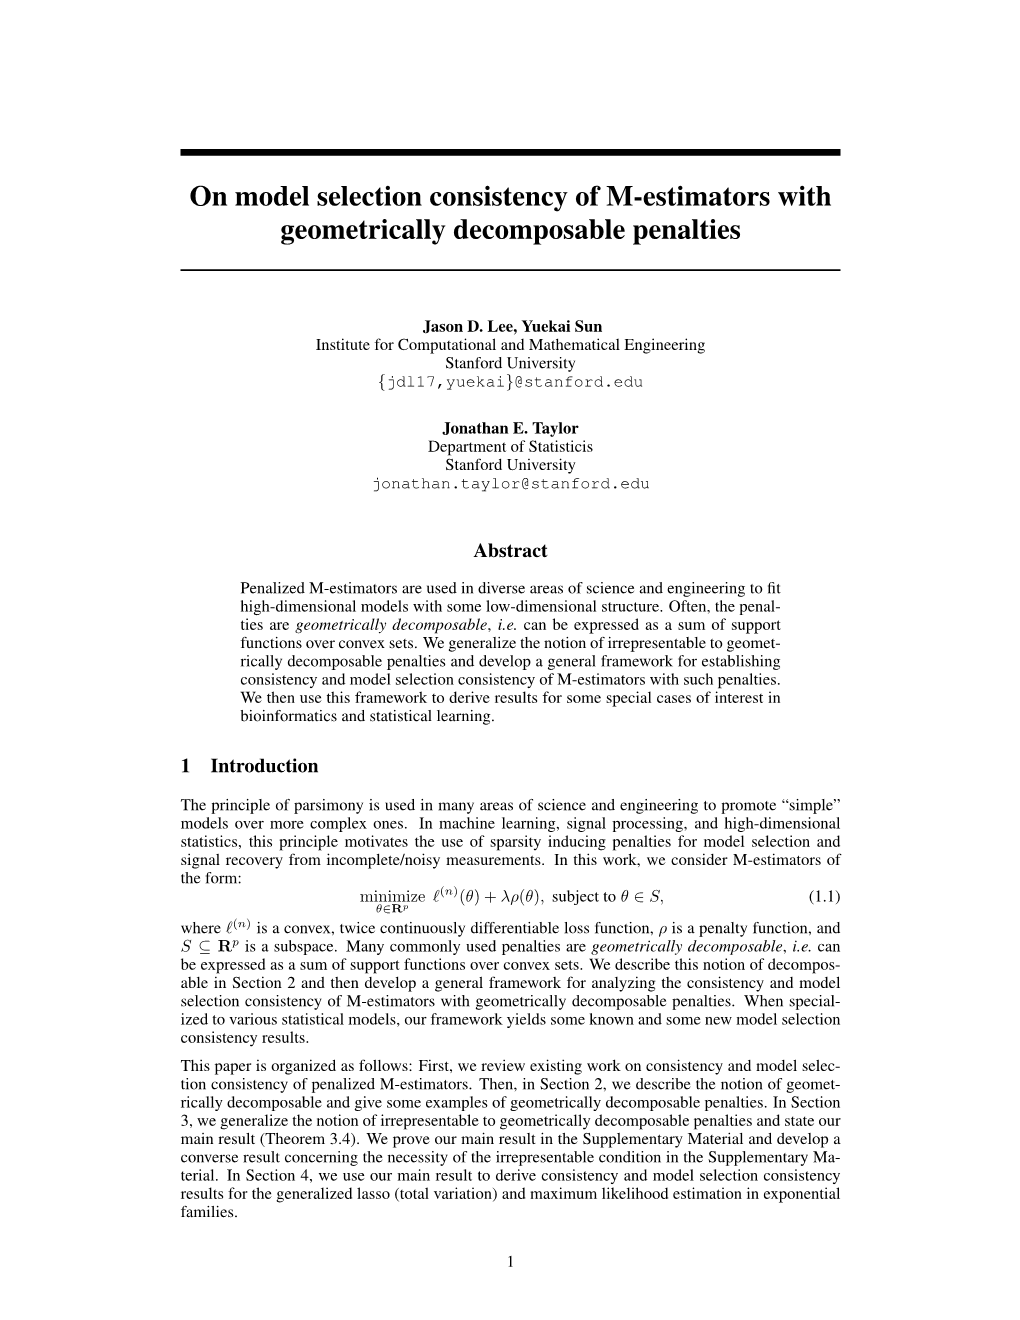 On Model Selection Consistency of Penalized M-Estimators: A